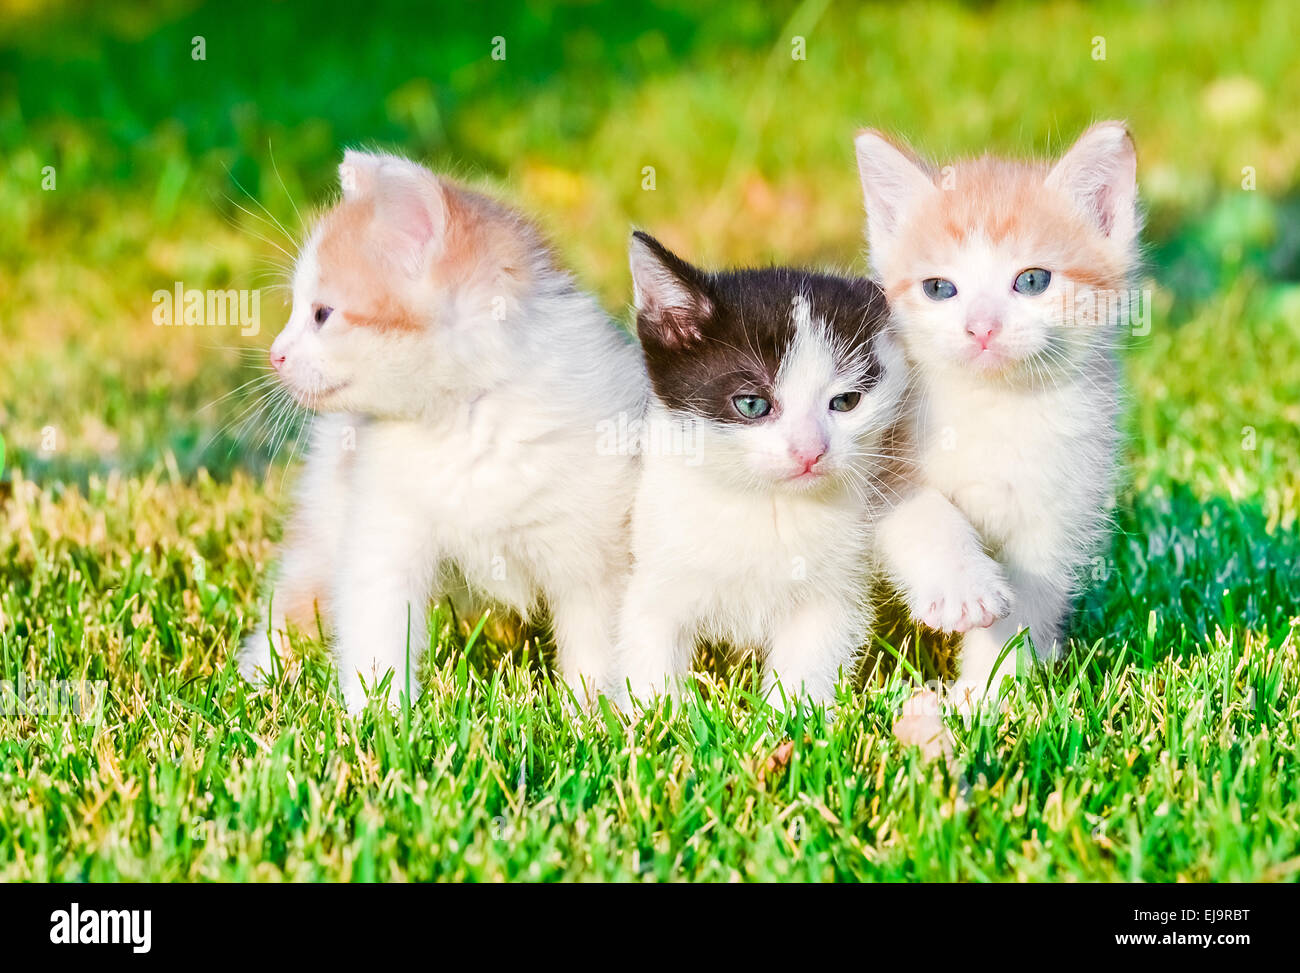 kittens on the grass Stock Photo